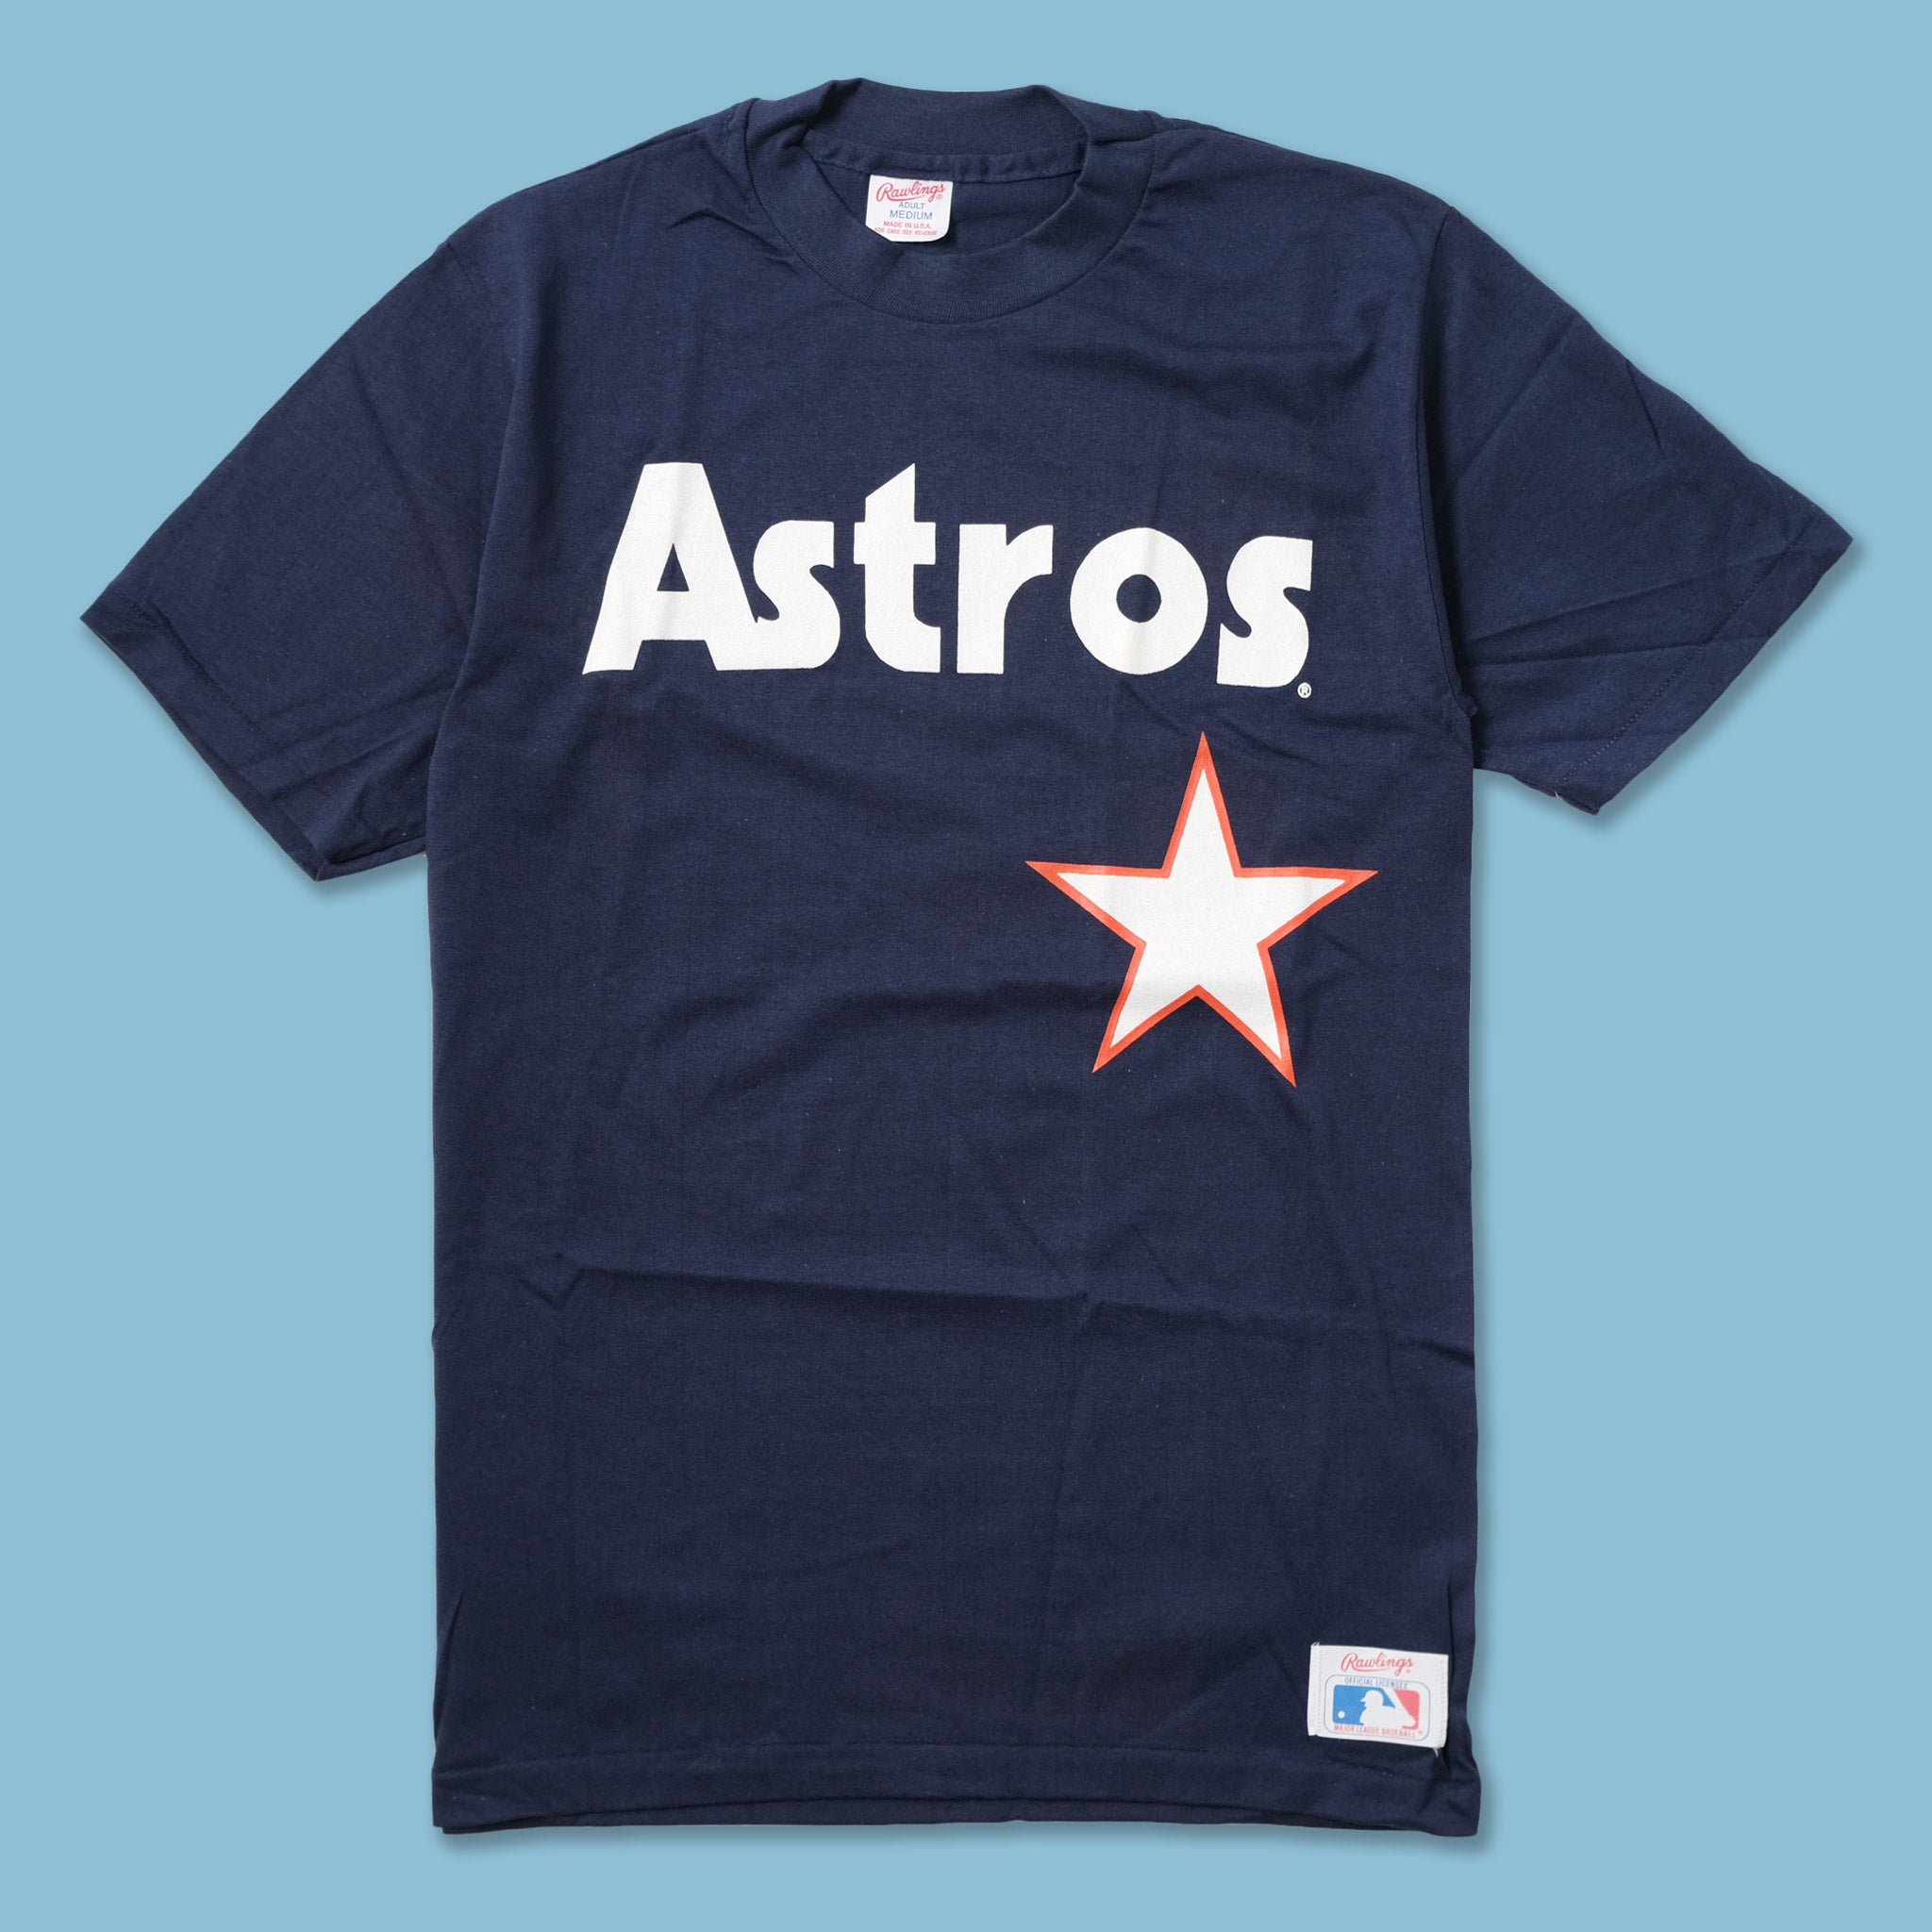 astros t shirt